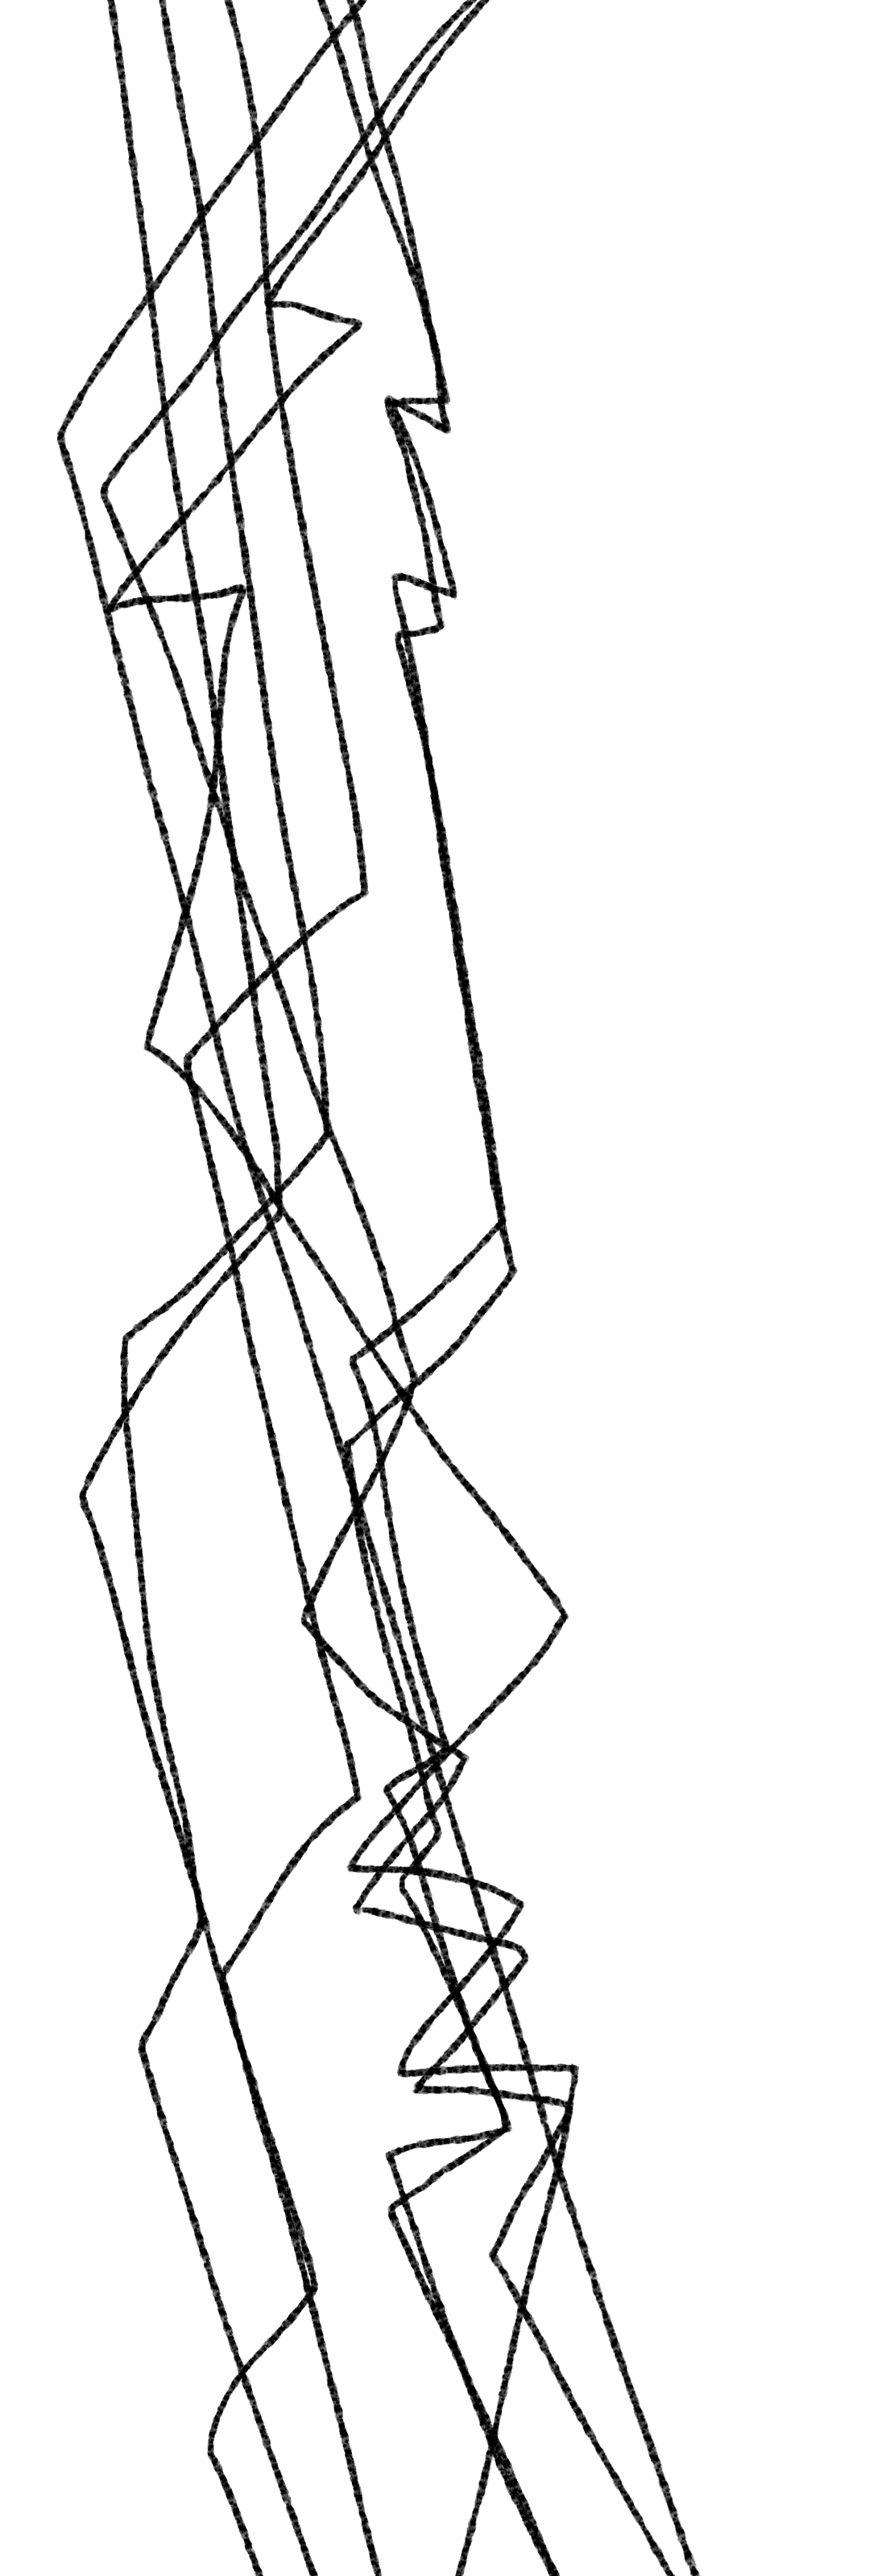 Illustration of jagged lines